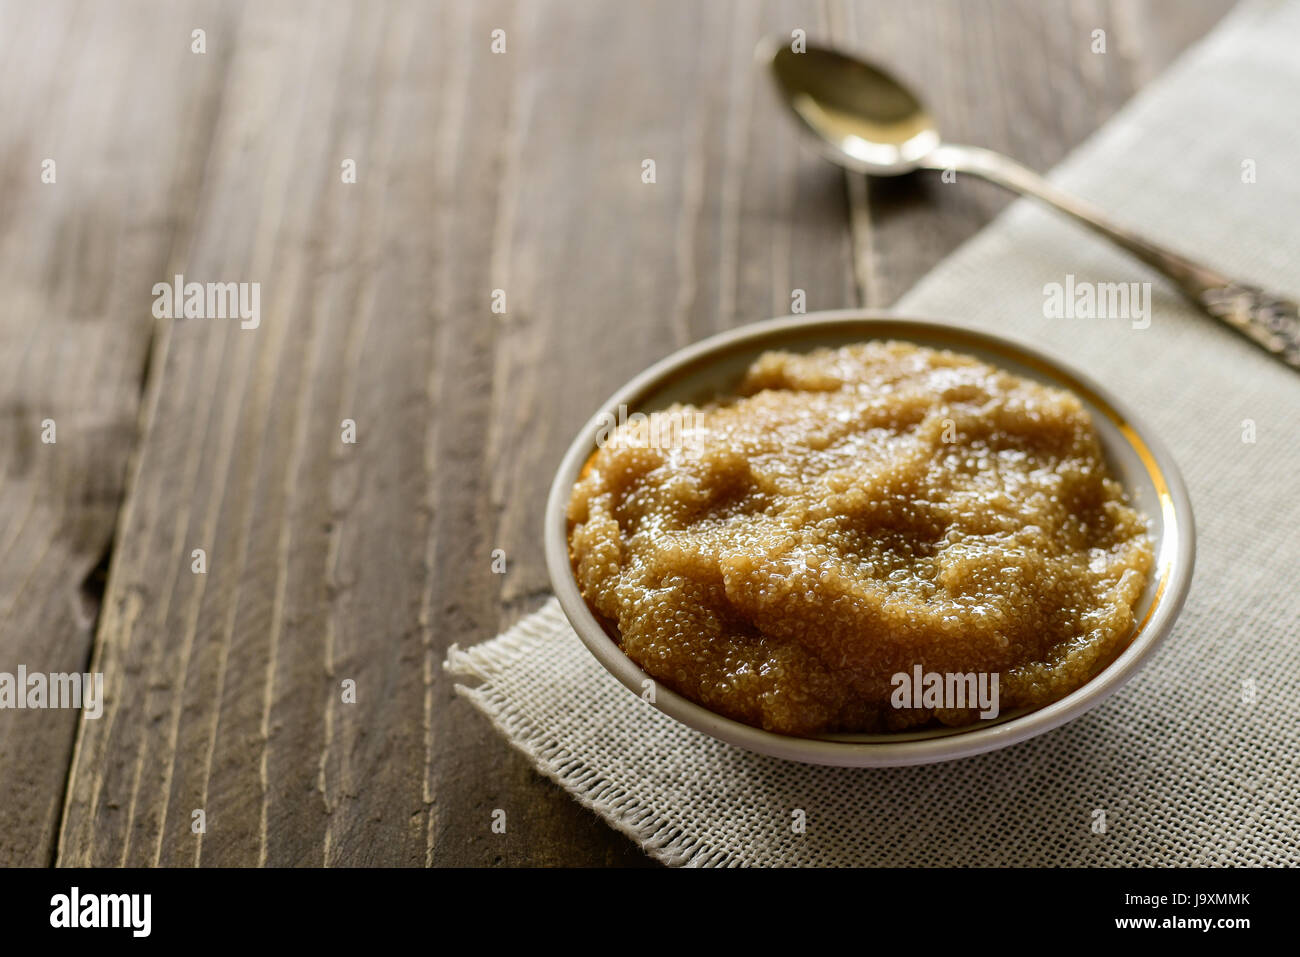 Bowl of amaranth porridge on table, close up view Stock Photo